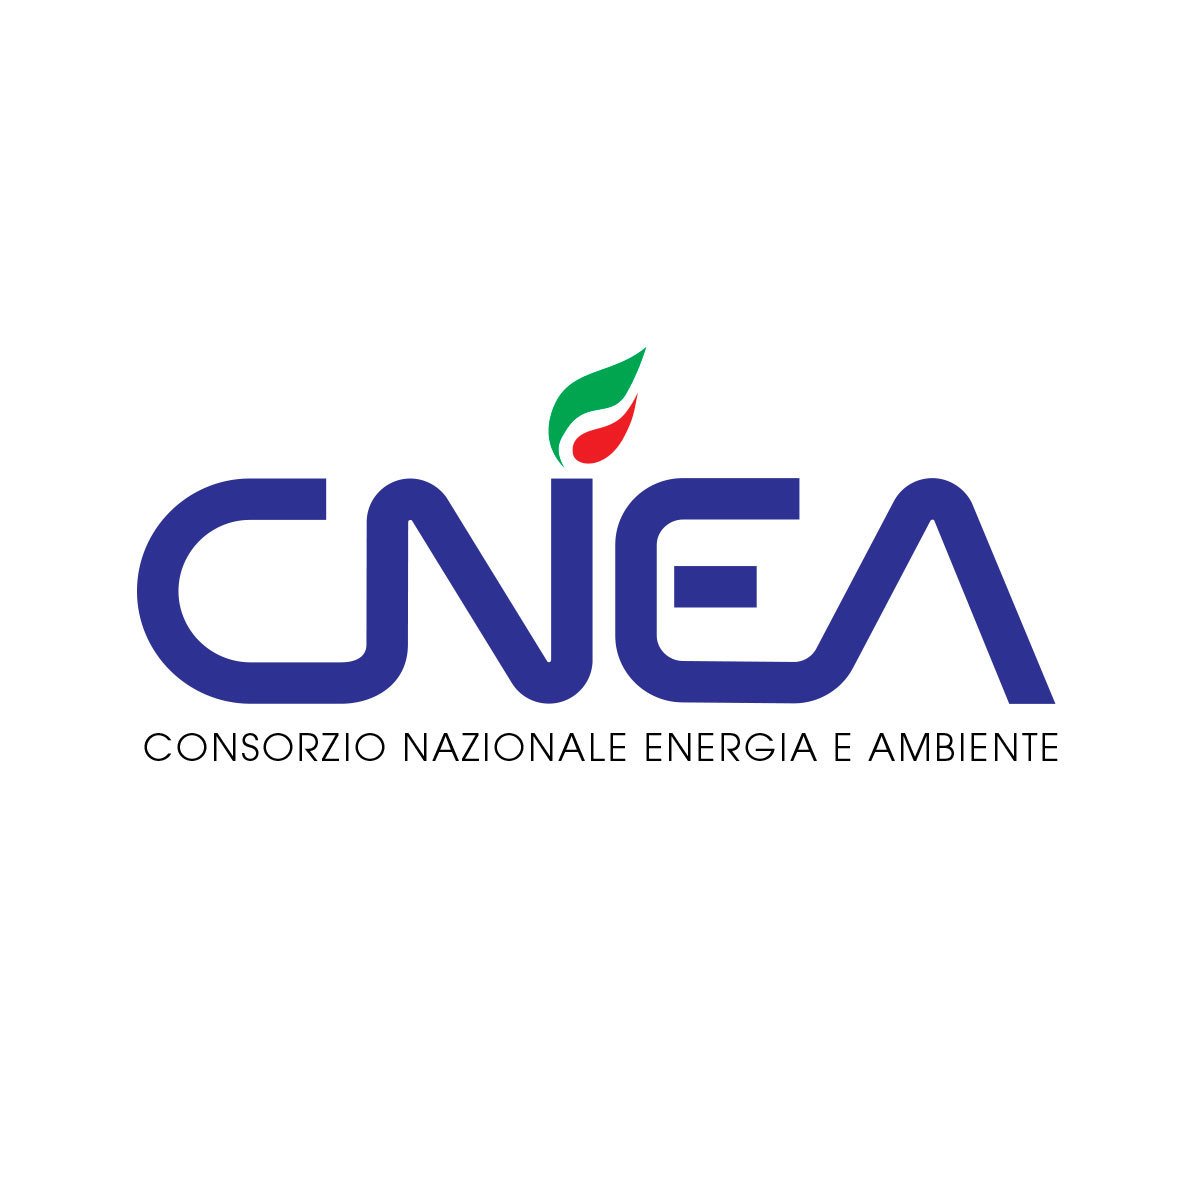 CNEA - 1999